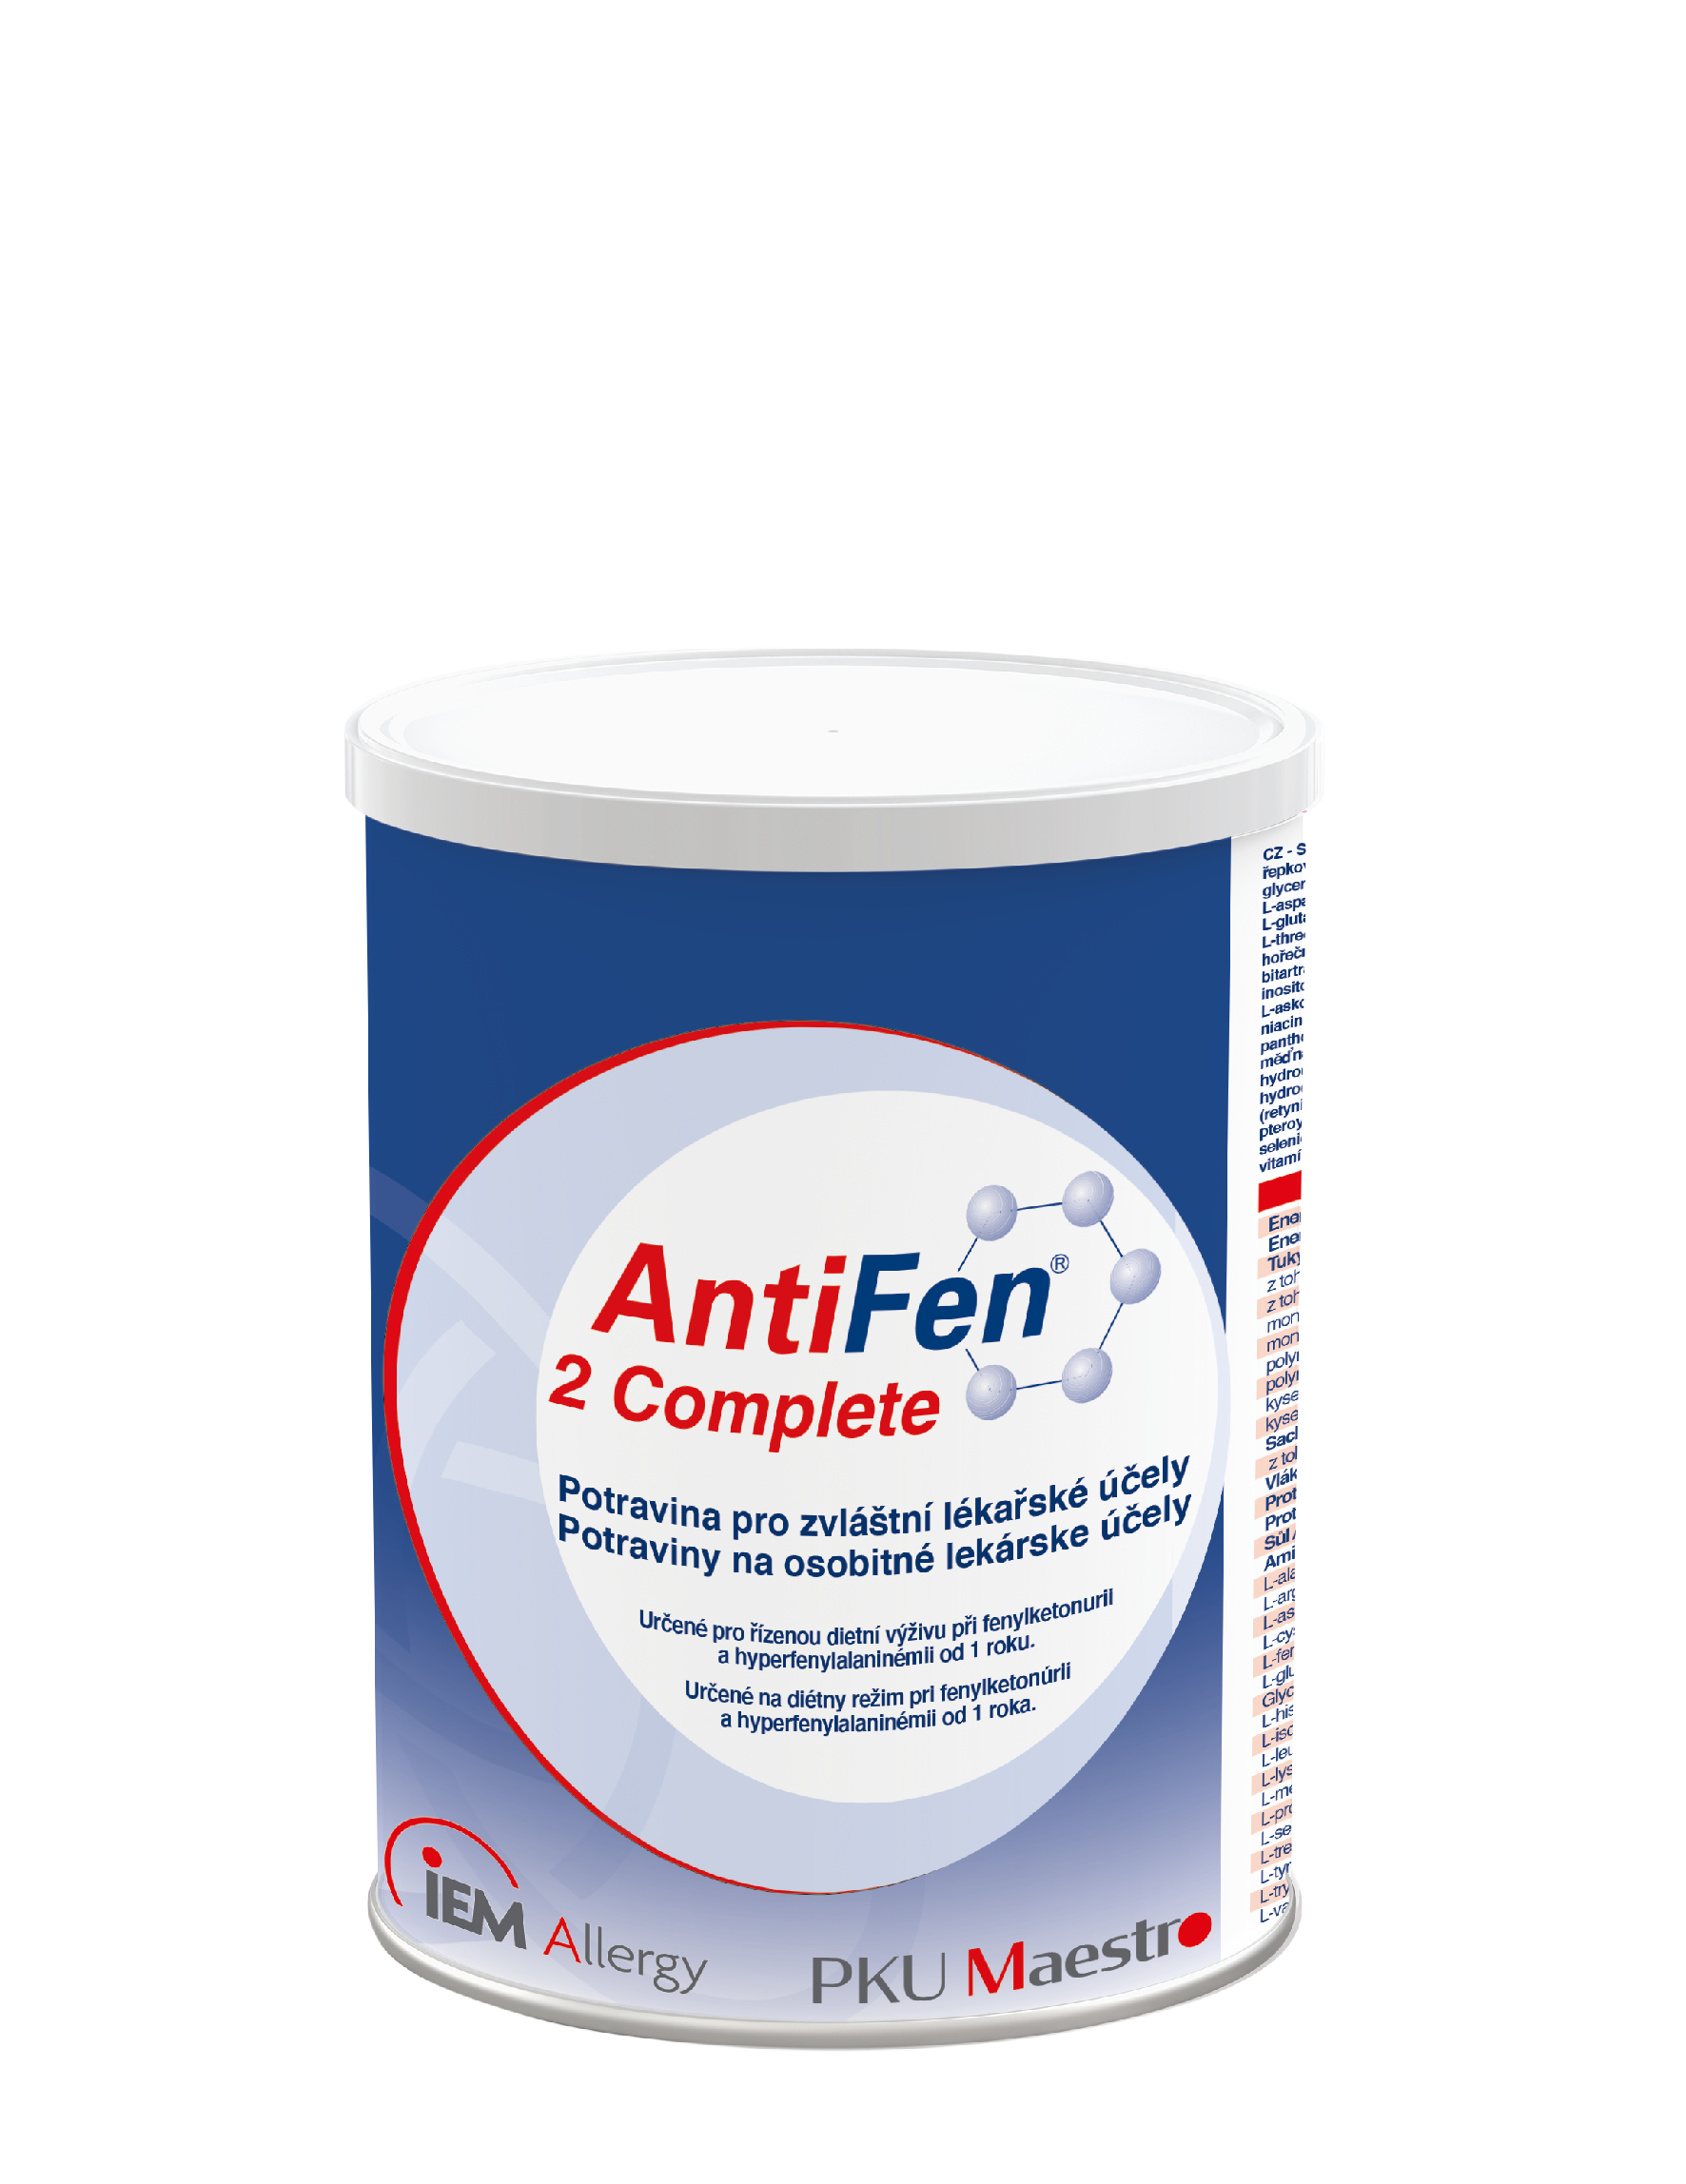 AntiFen 2 Complete